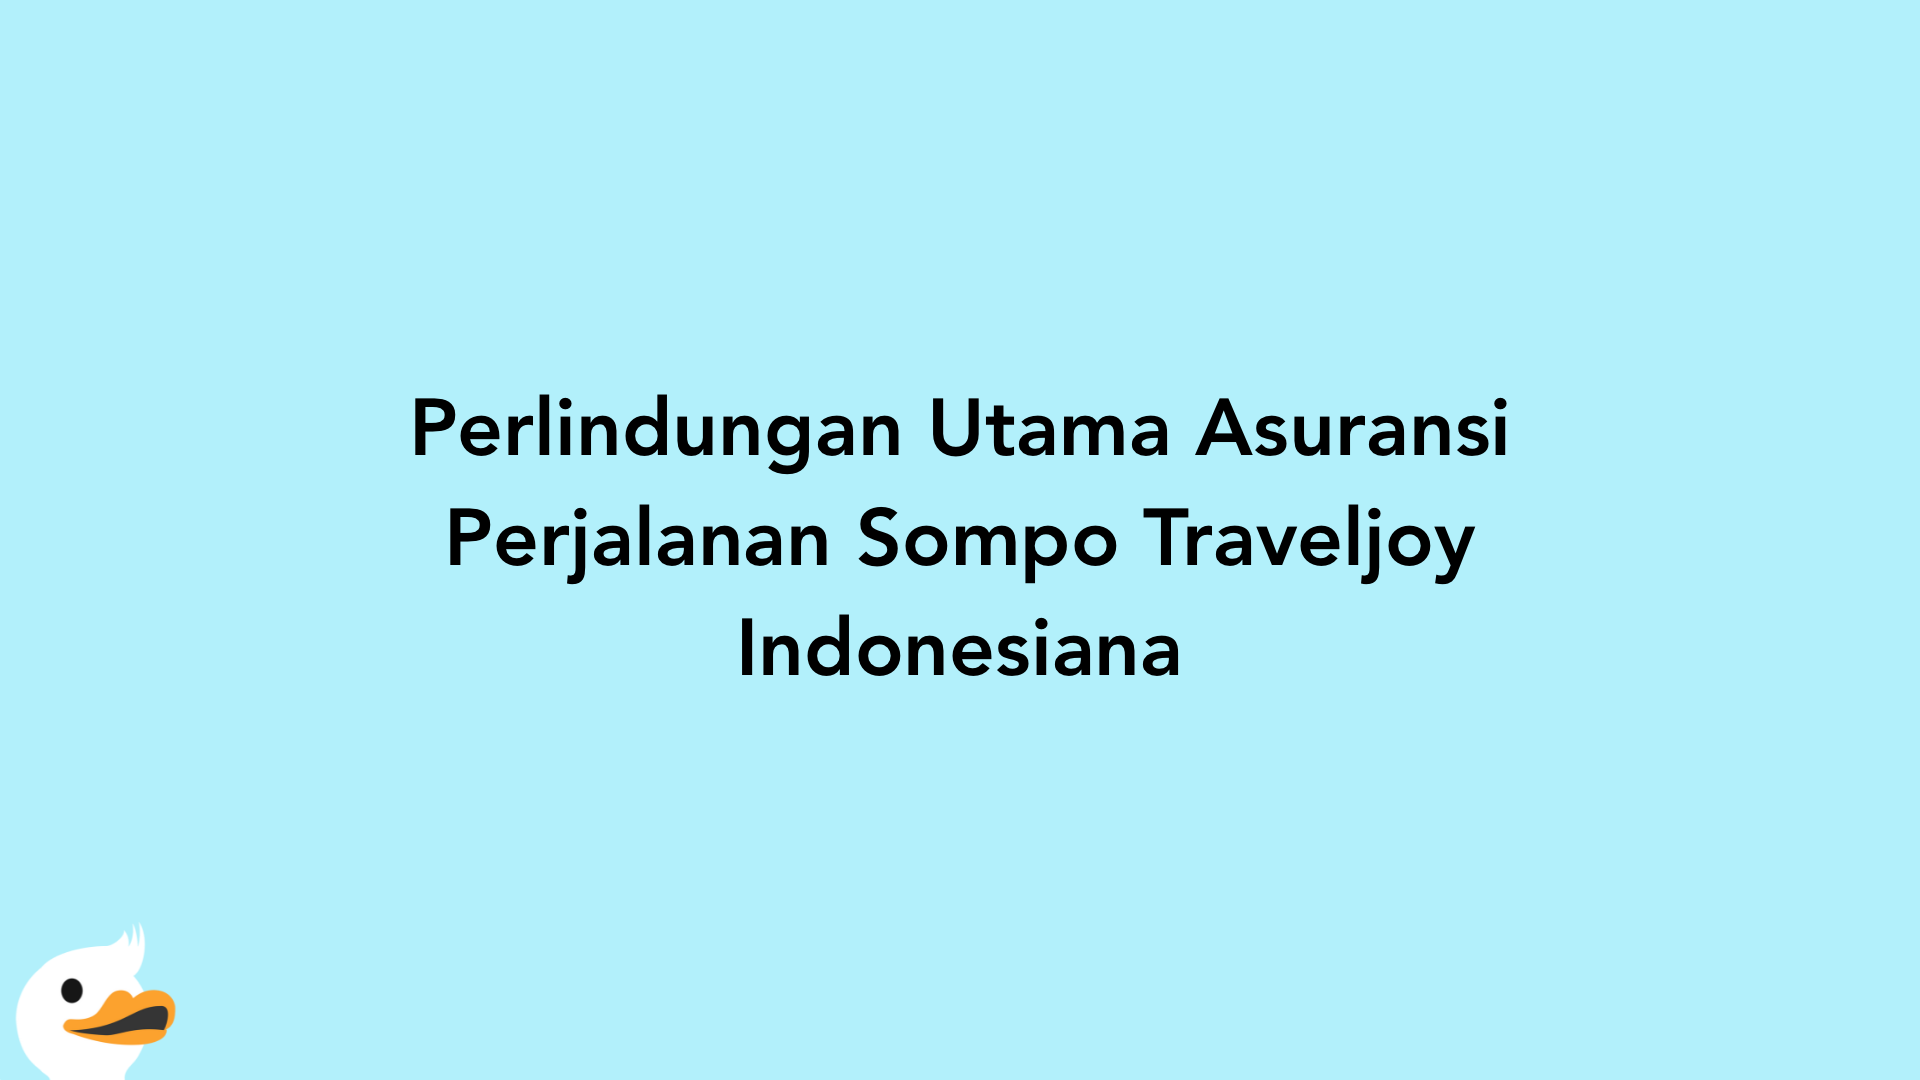 Perlindungan Utama Asuransi Perjalanan Sompo Traveljoy Indonesiana